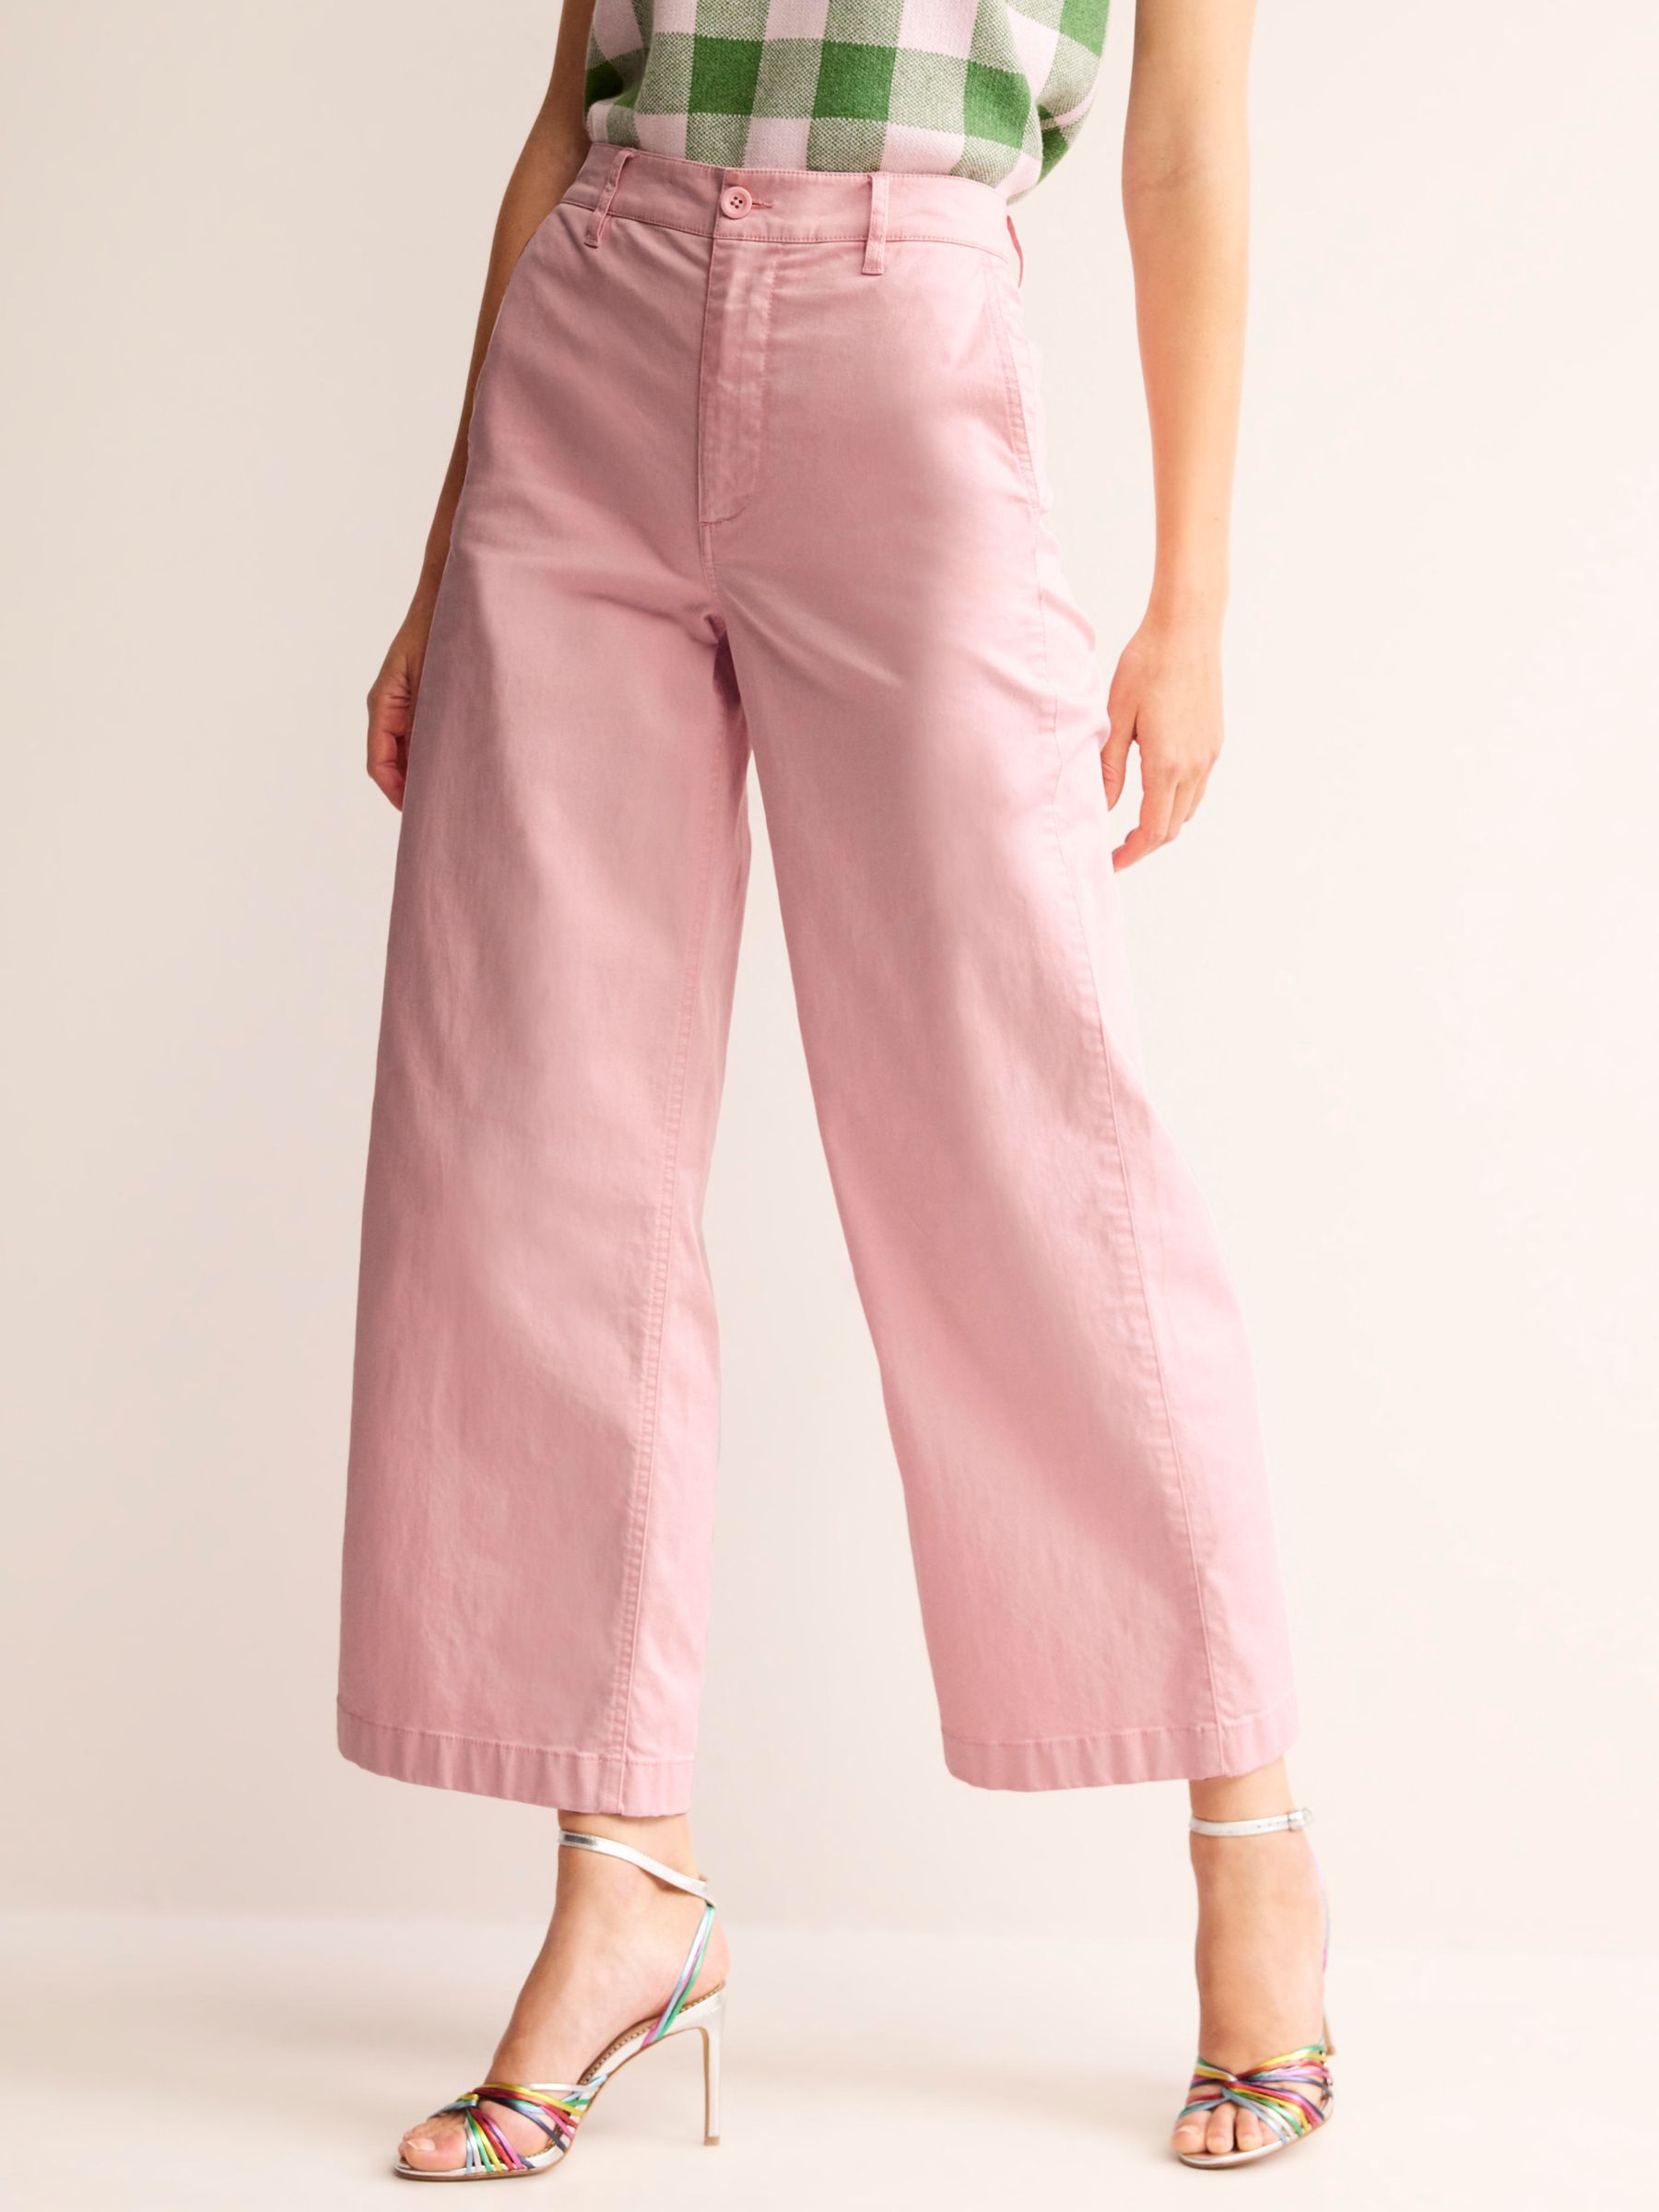 Boden High Waist Pocket leggings in Pink